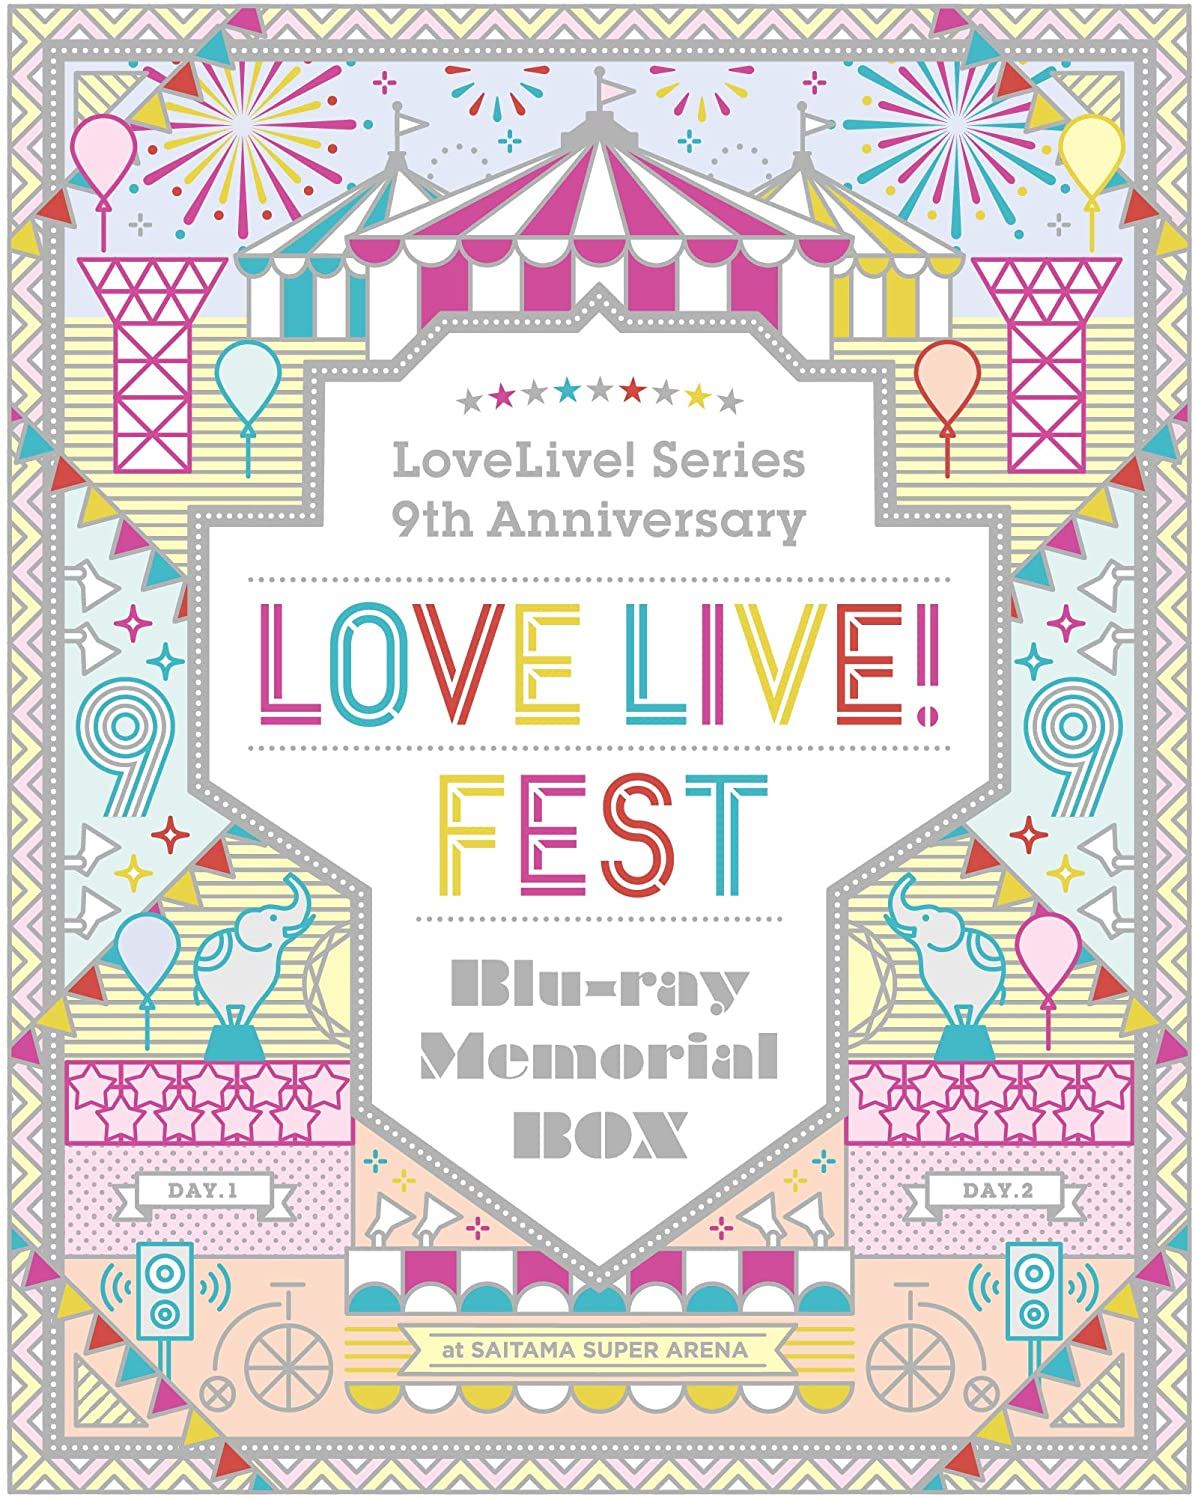 Love Live! Series 9th Anniversary Love Live! Fest Blu-ray Memorial Box